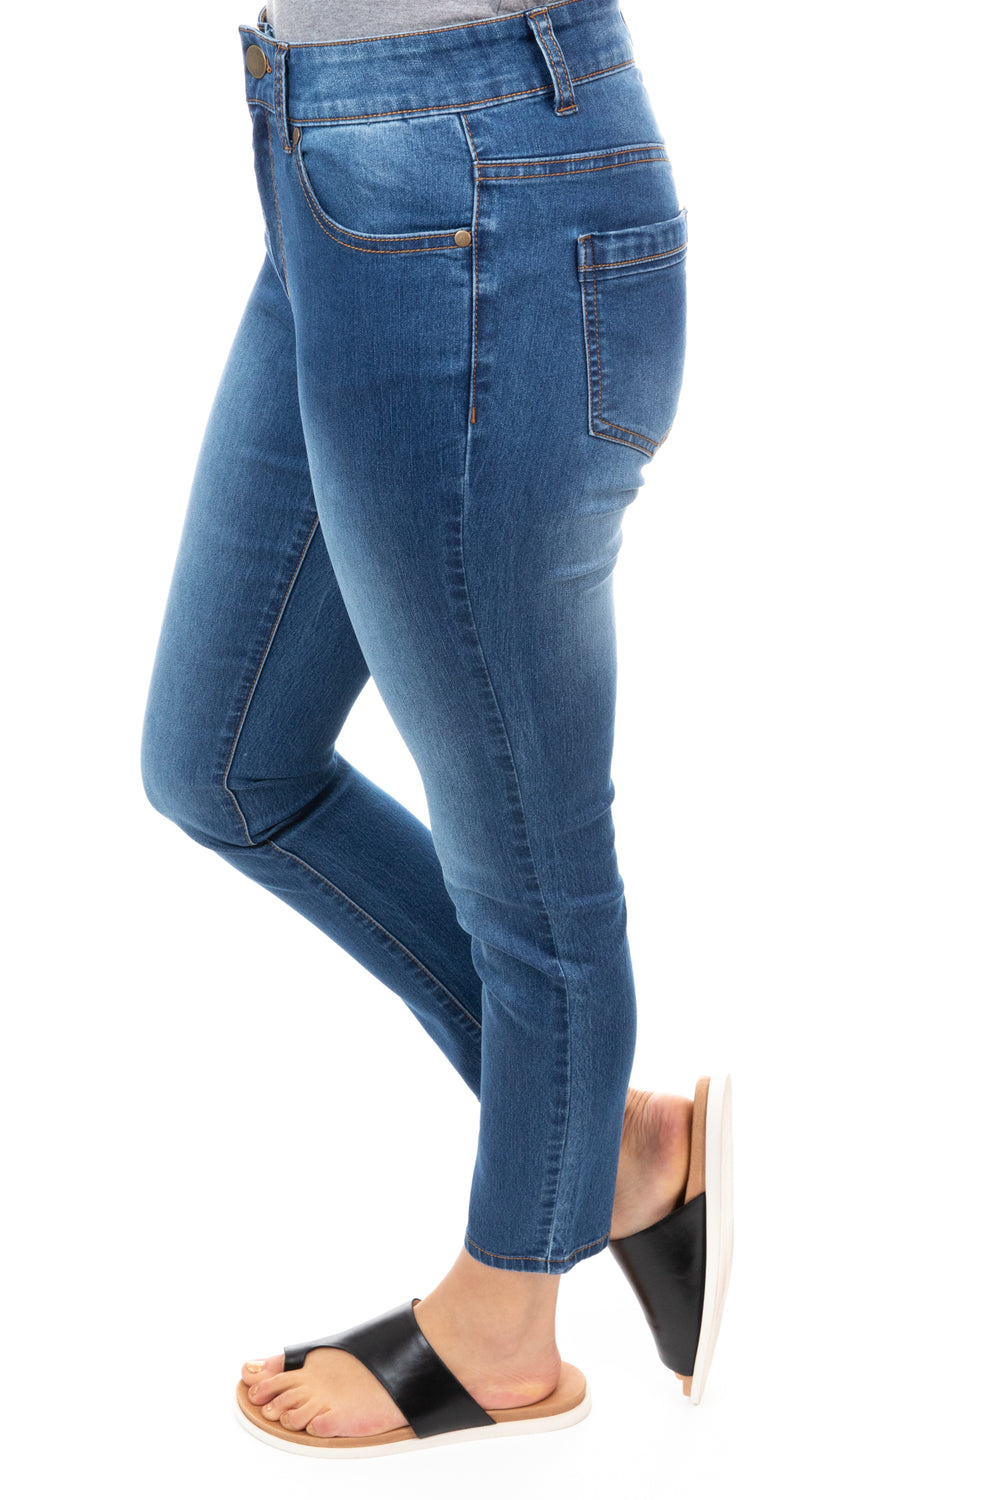 Foil - Lynda Skinny Ankle Jean - Indigo Denim - Pizazz Boutique